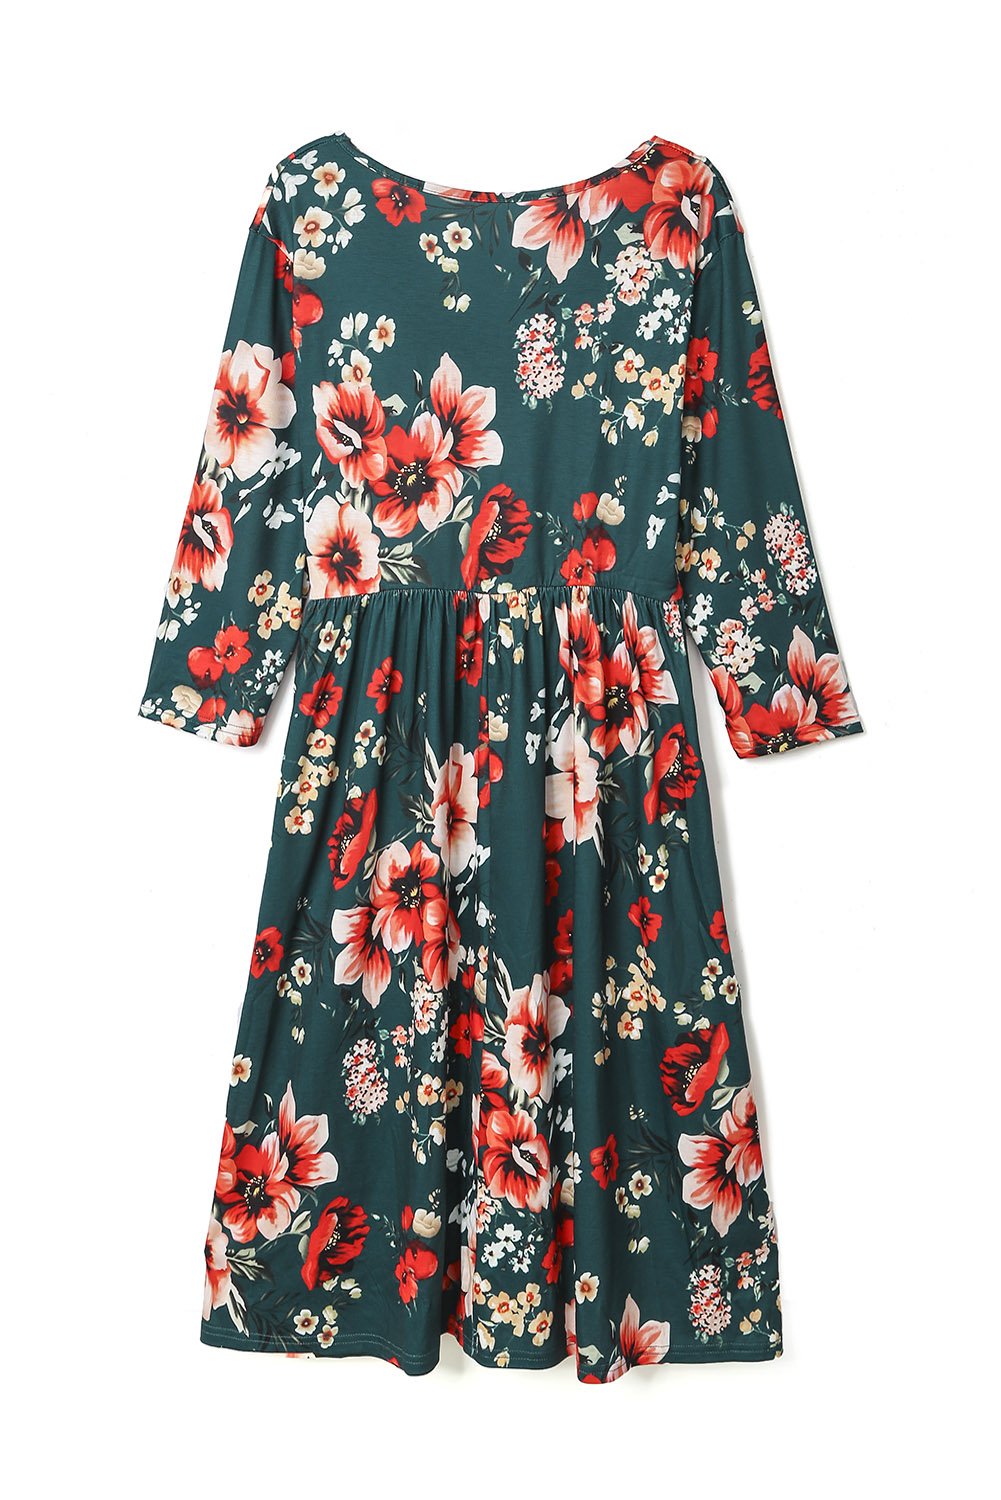 Modest Church Dresses – Jen Clothing